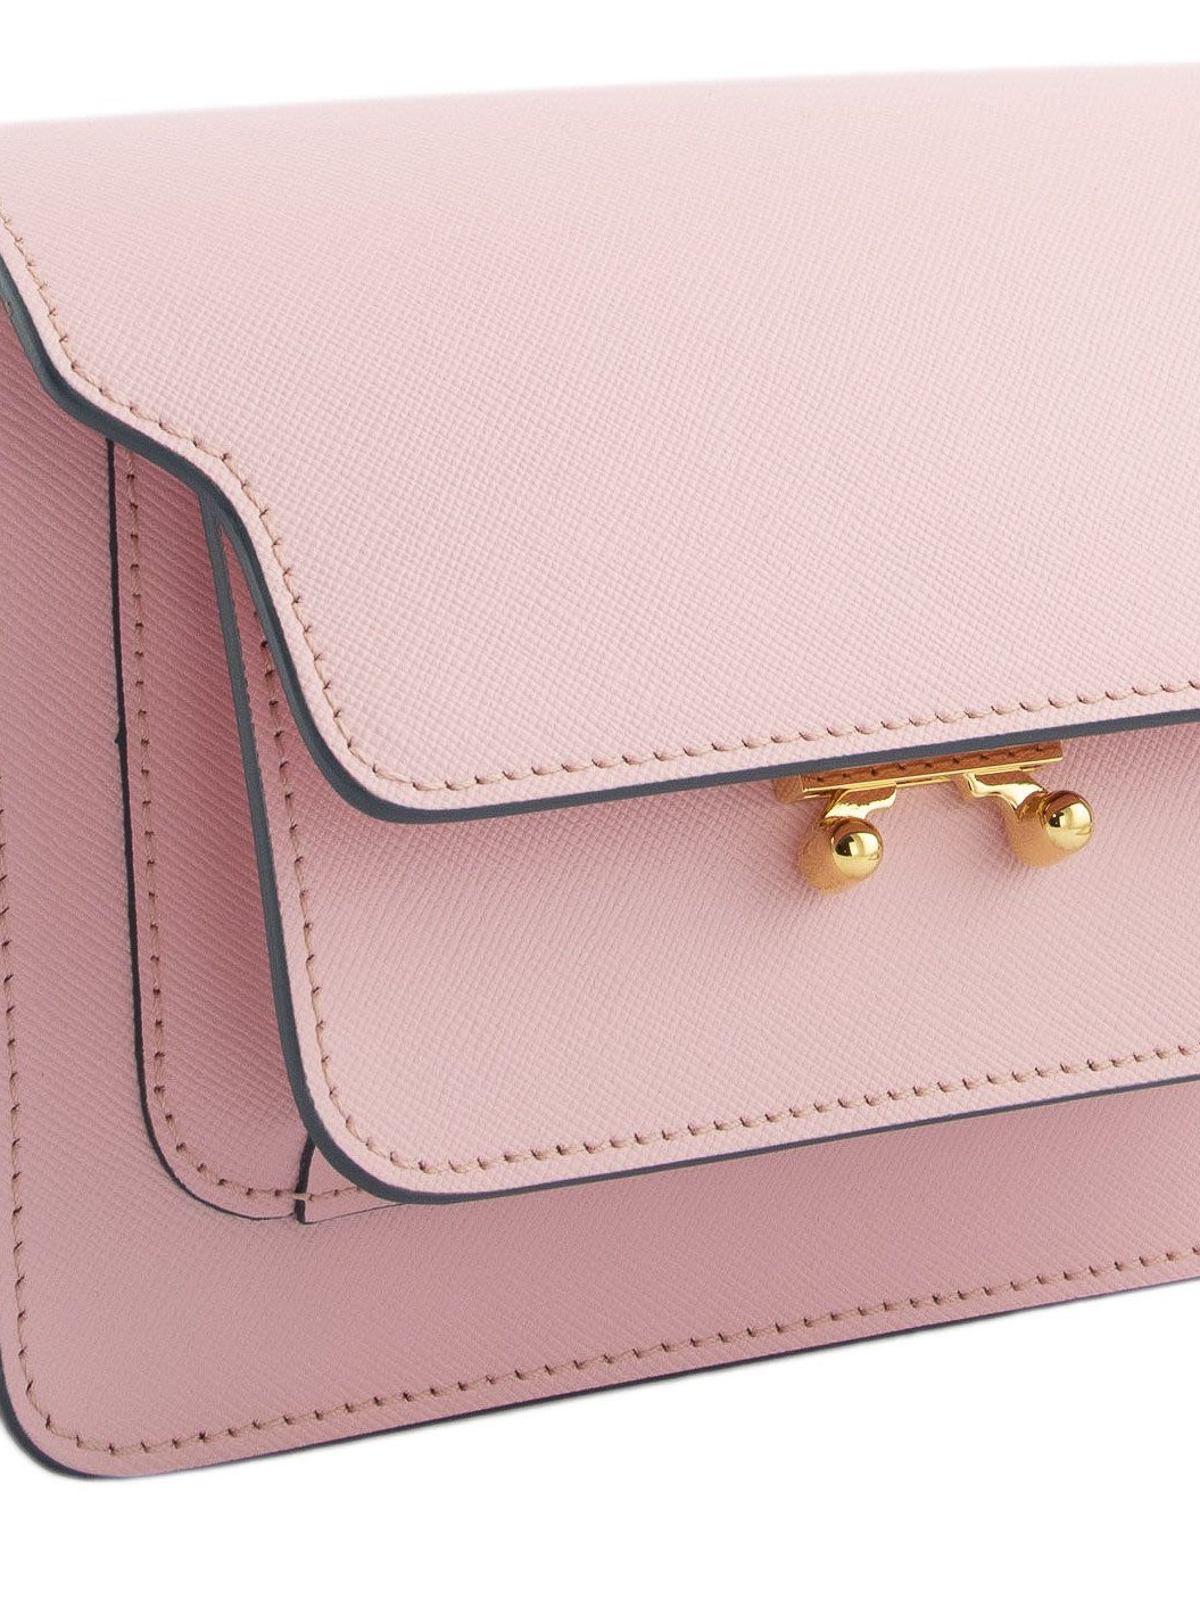 Shoulder bags Marni - Saffiano pink leather Trunk mini bag